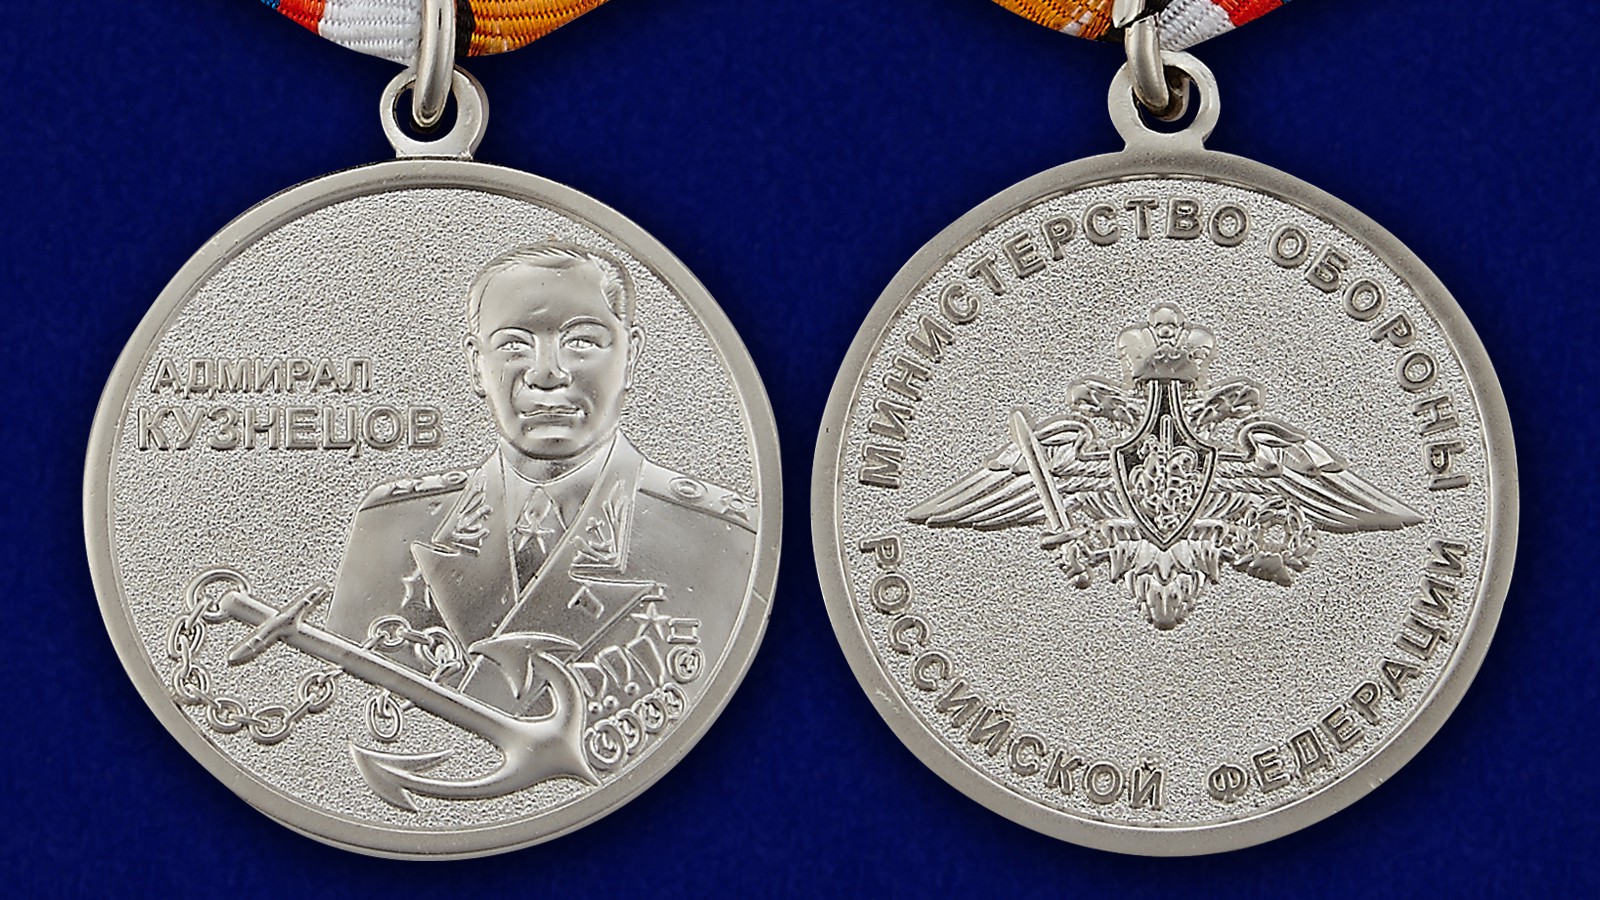 Описание медали "Адмирал Кузнецов" - аверс и реверс